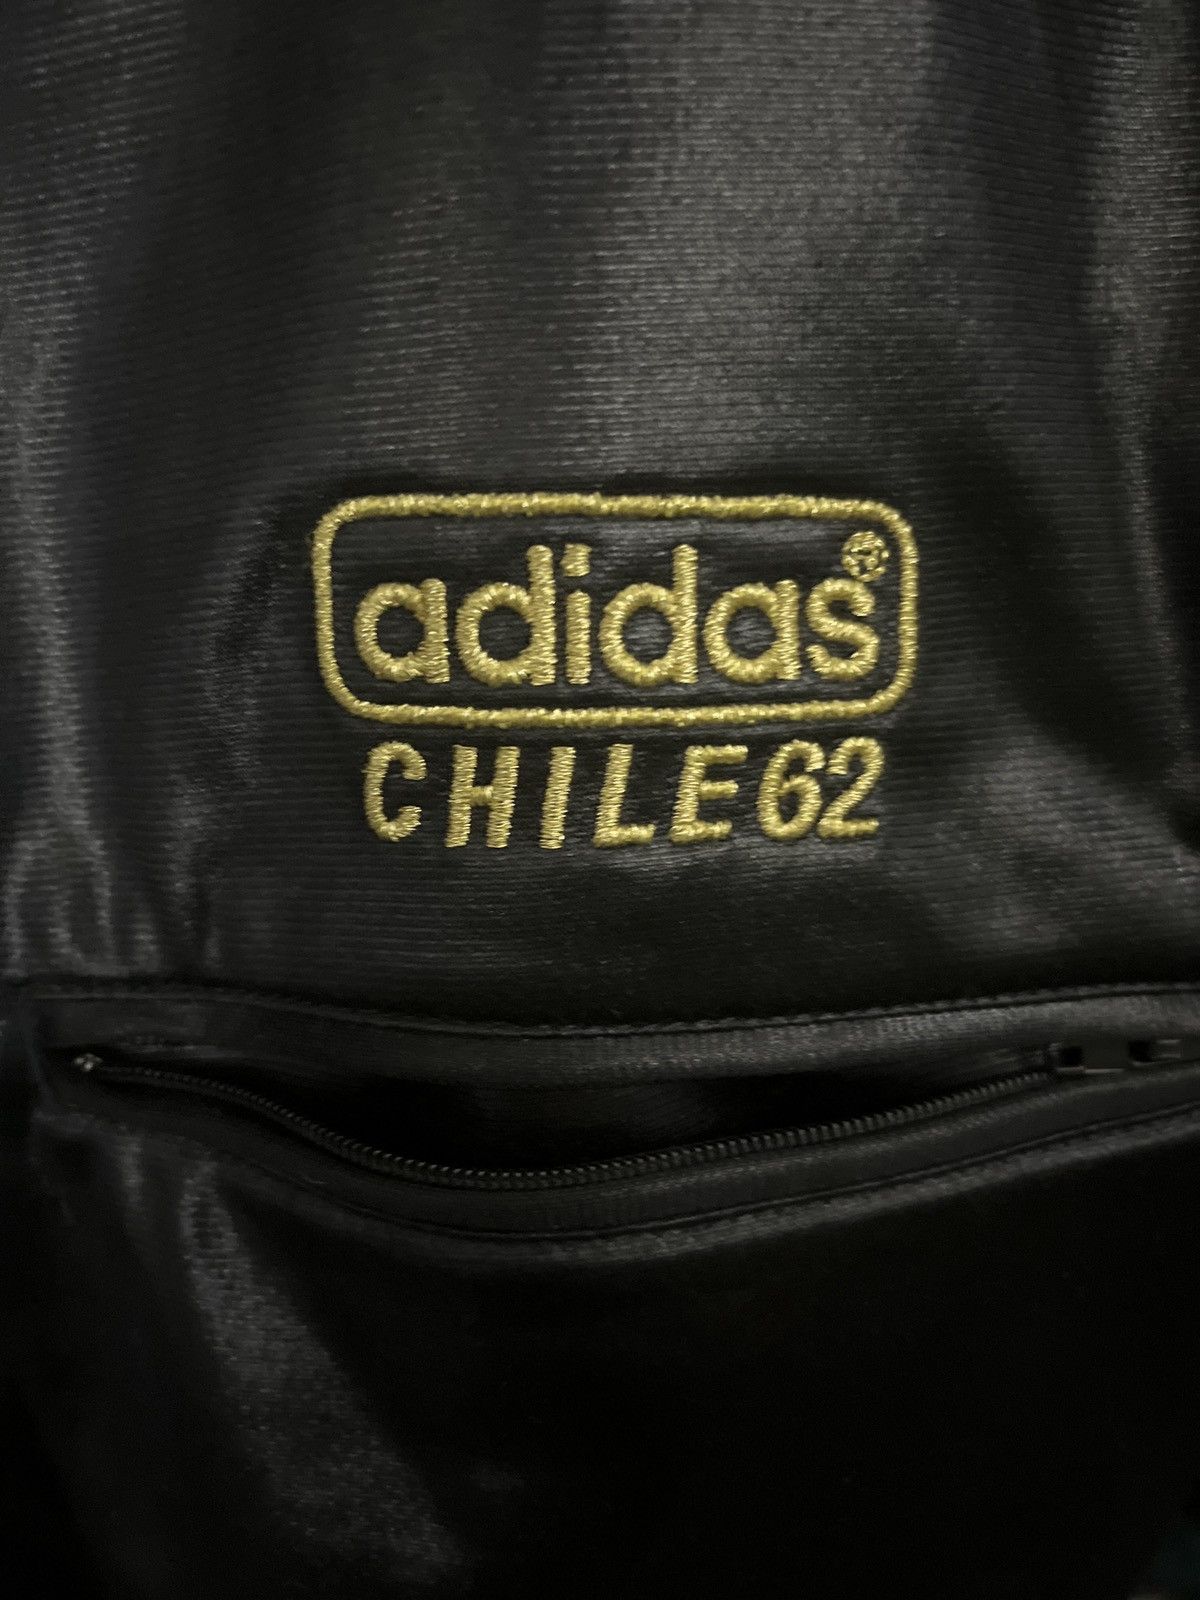 Adidas RARE Adidas Chile 62 Tracksuit Jacket Size US L / EU 52-54 / 3 - 9 Preview